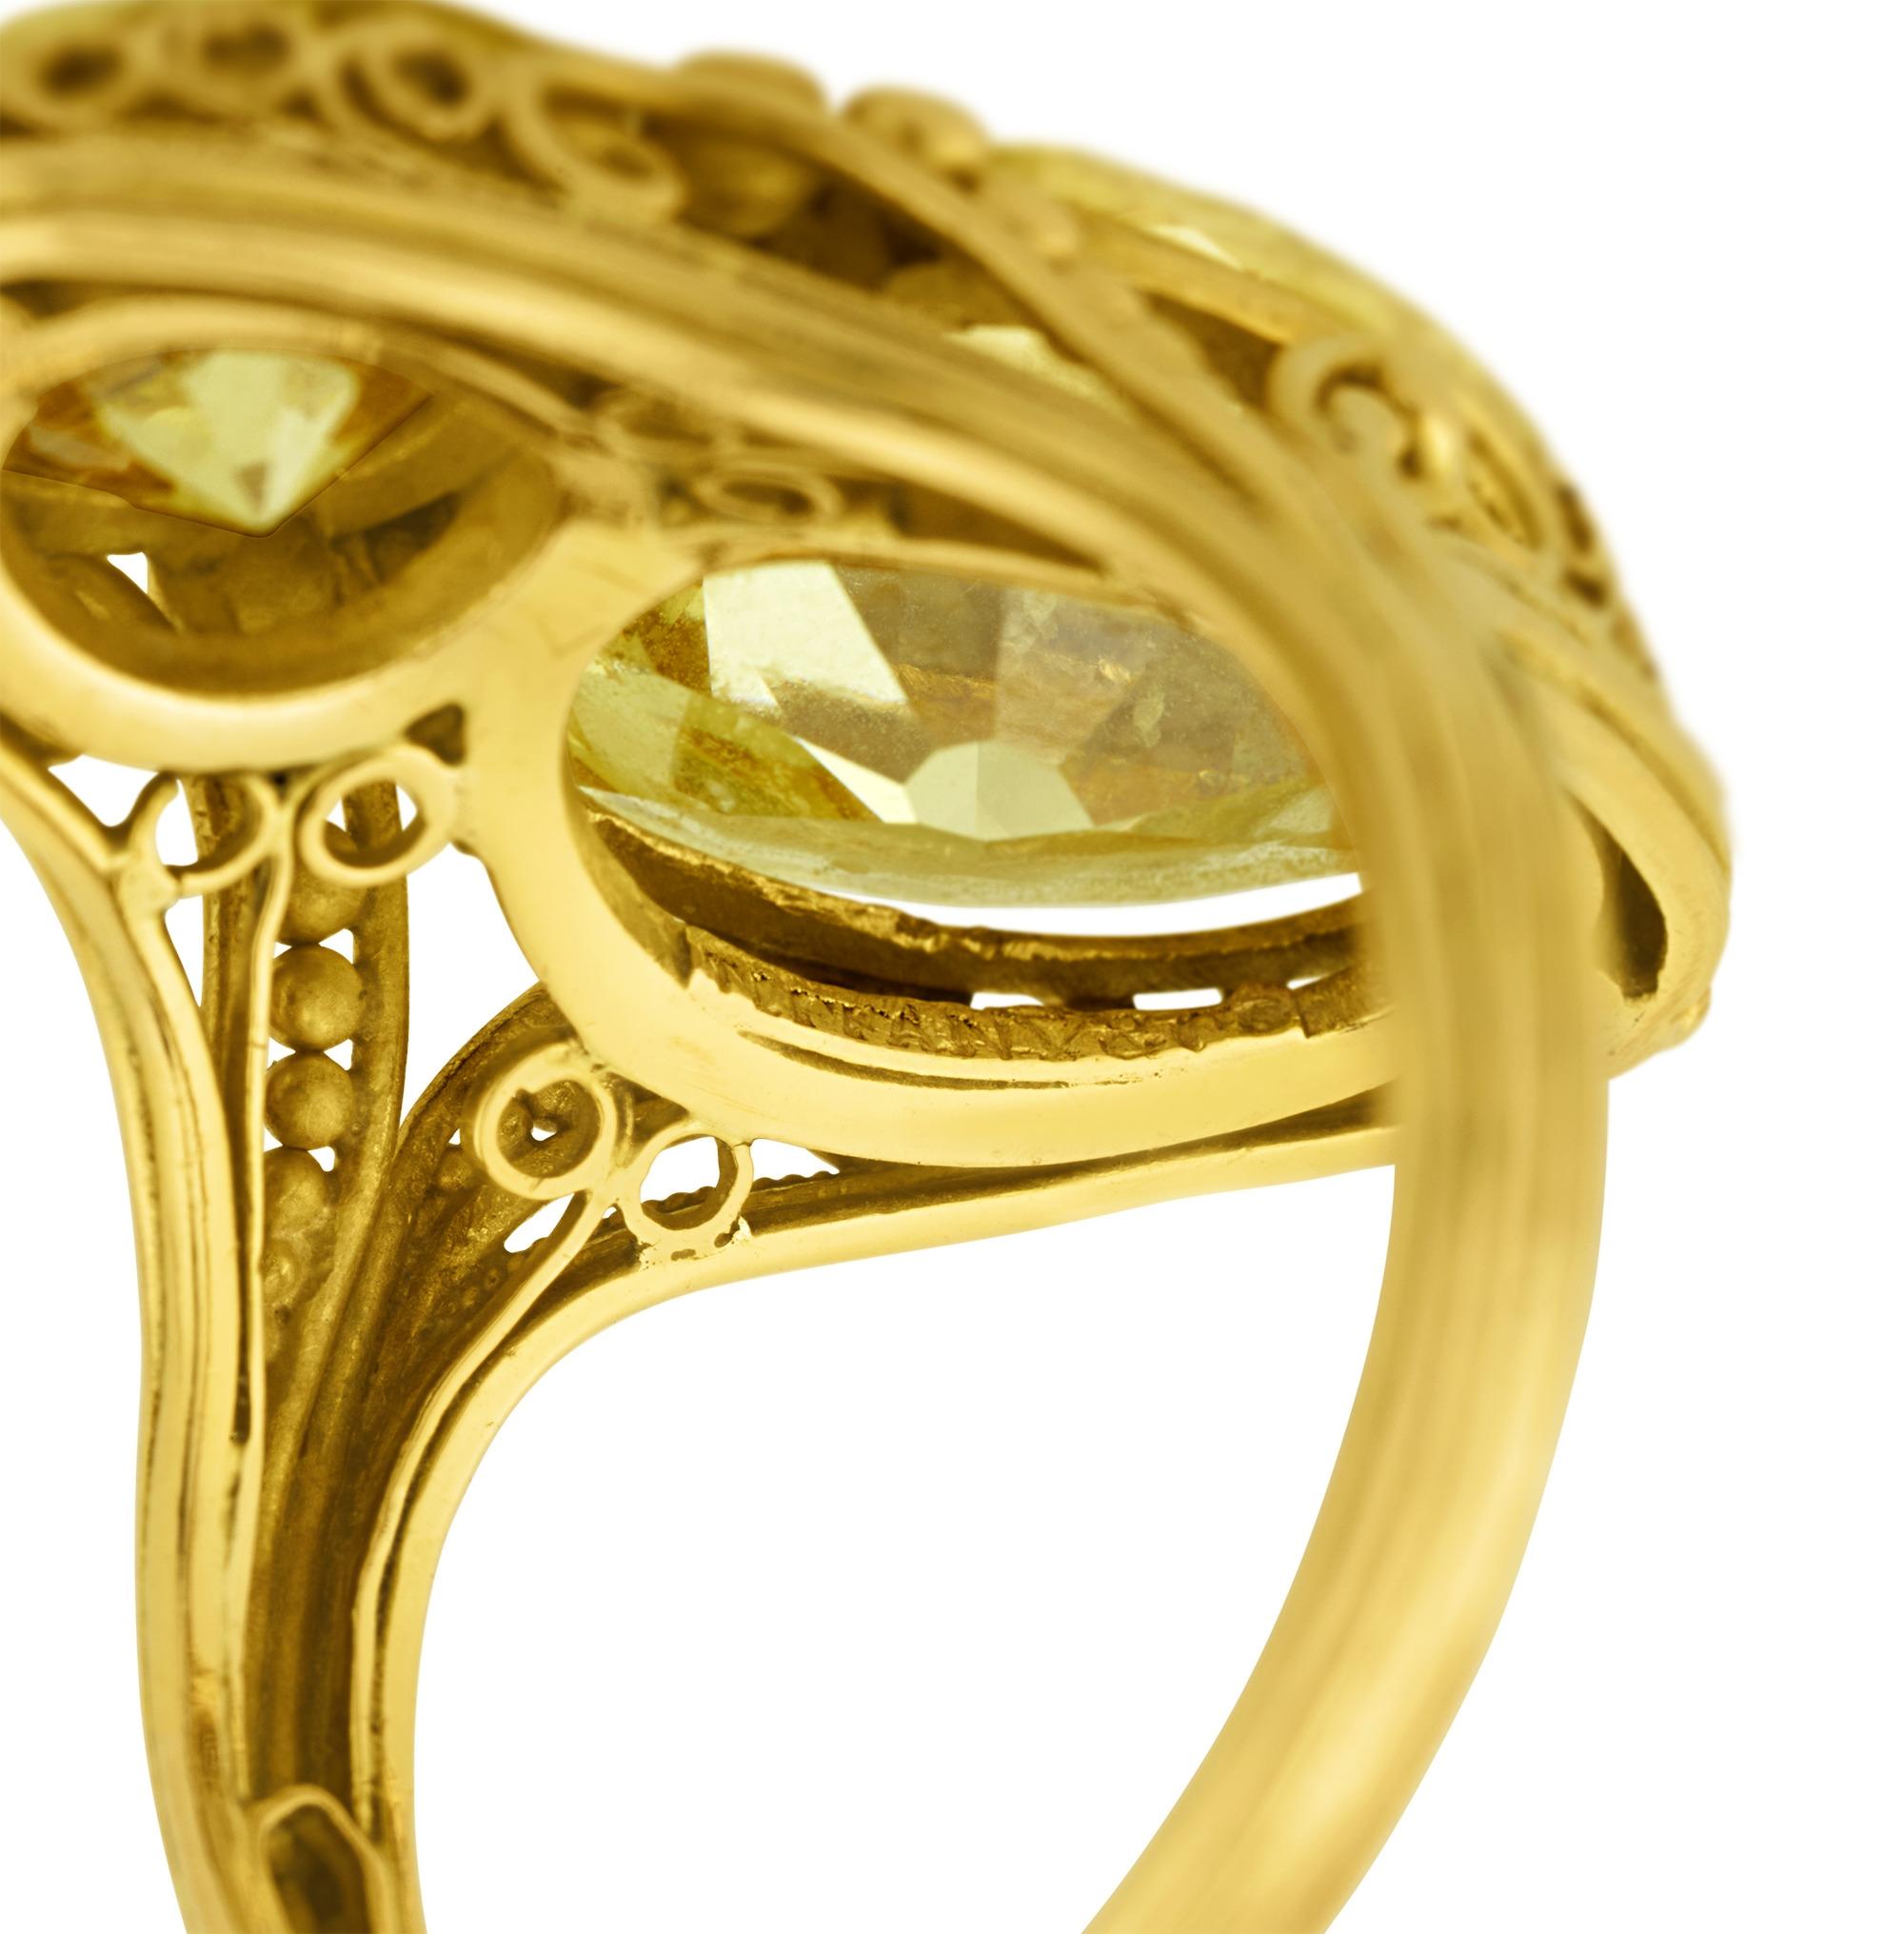 tiffany yellow sapphire ring